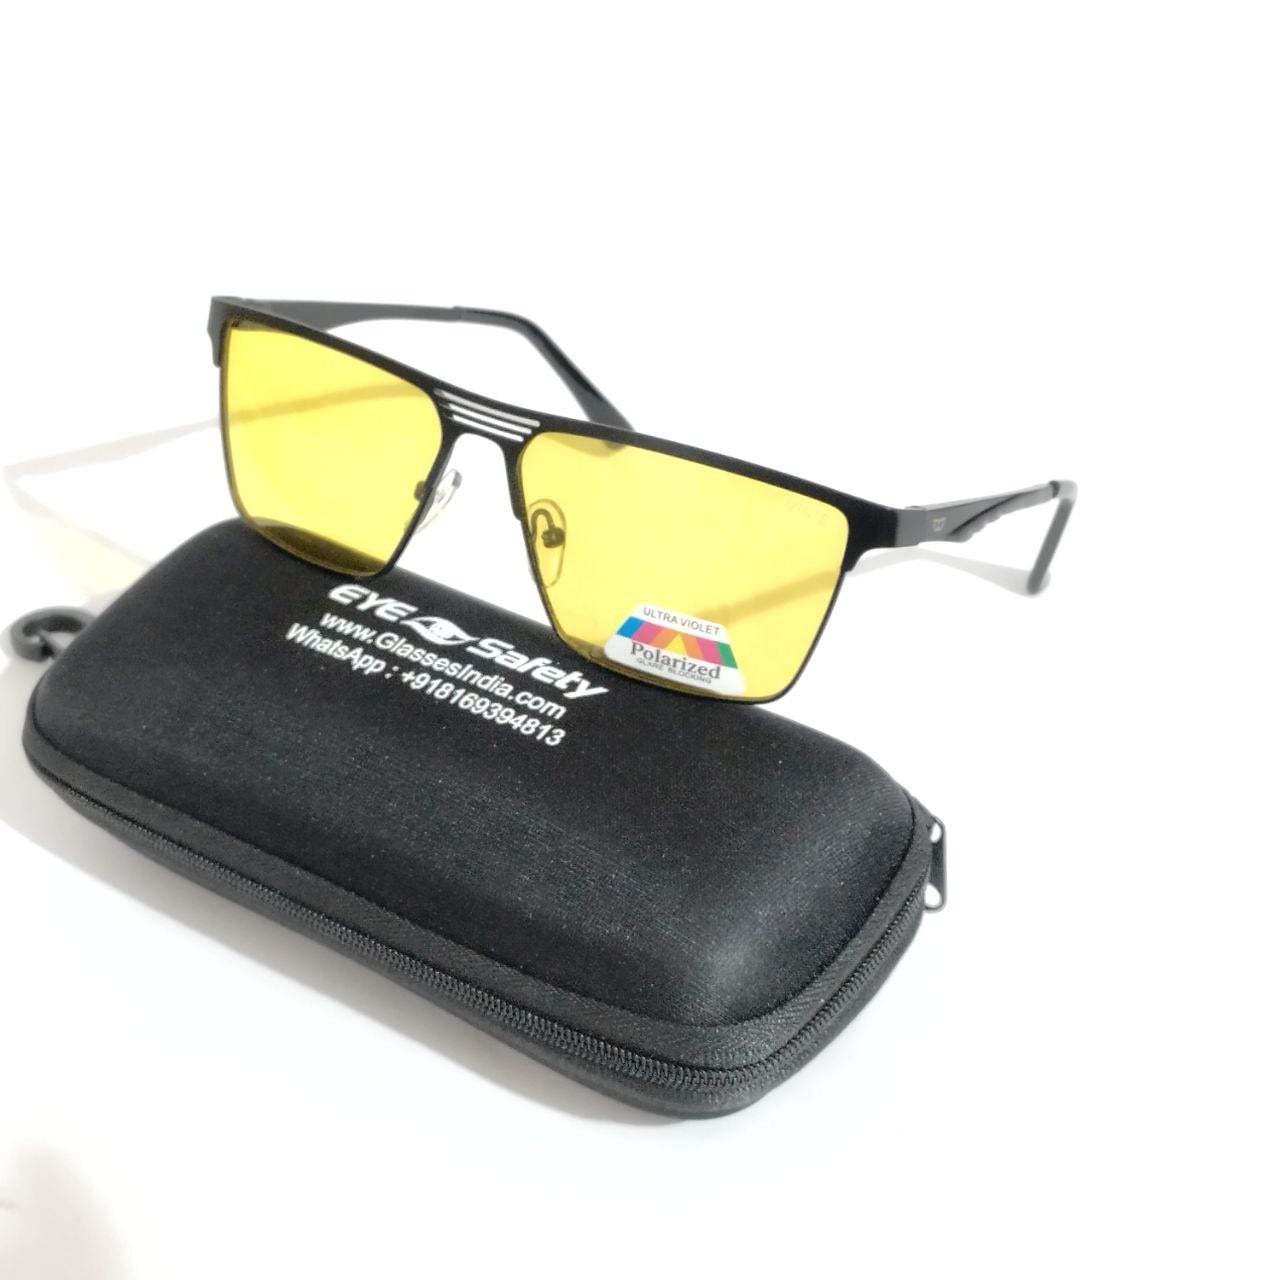 Gleam Guard: Yellow Polarized Sunglasses for Optimal Night Vision